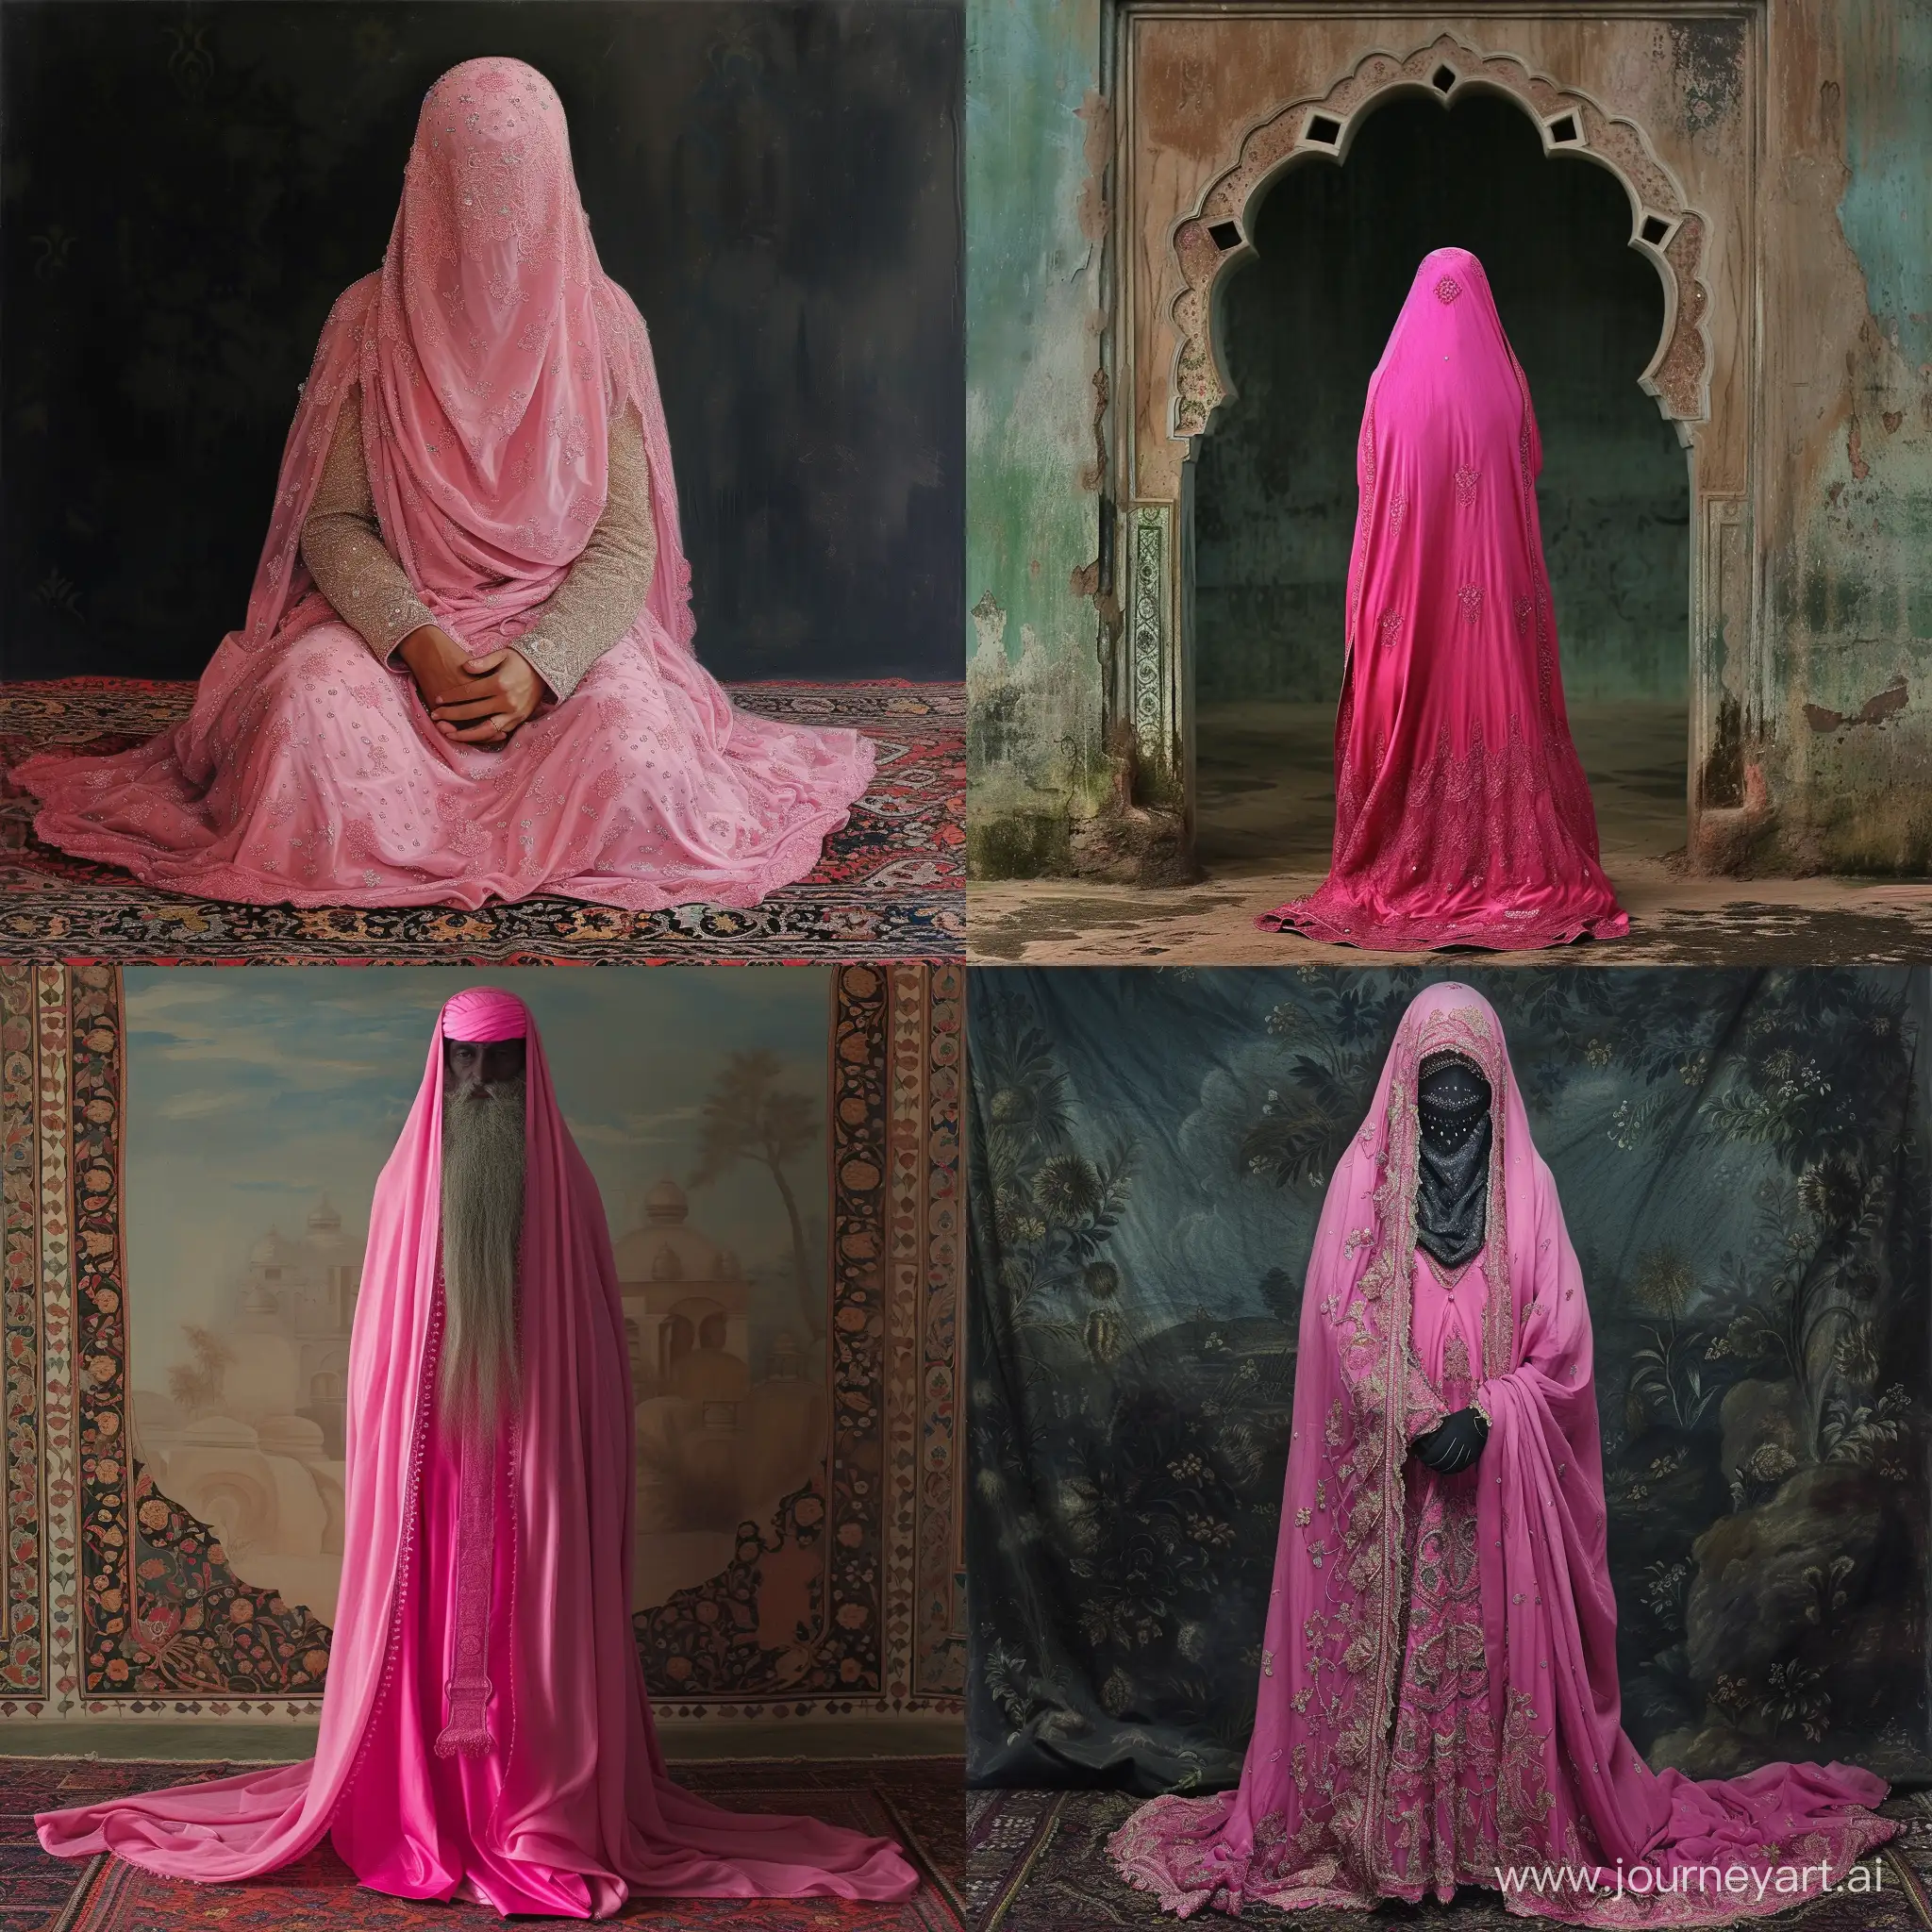 a mullah with pink dress